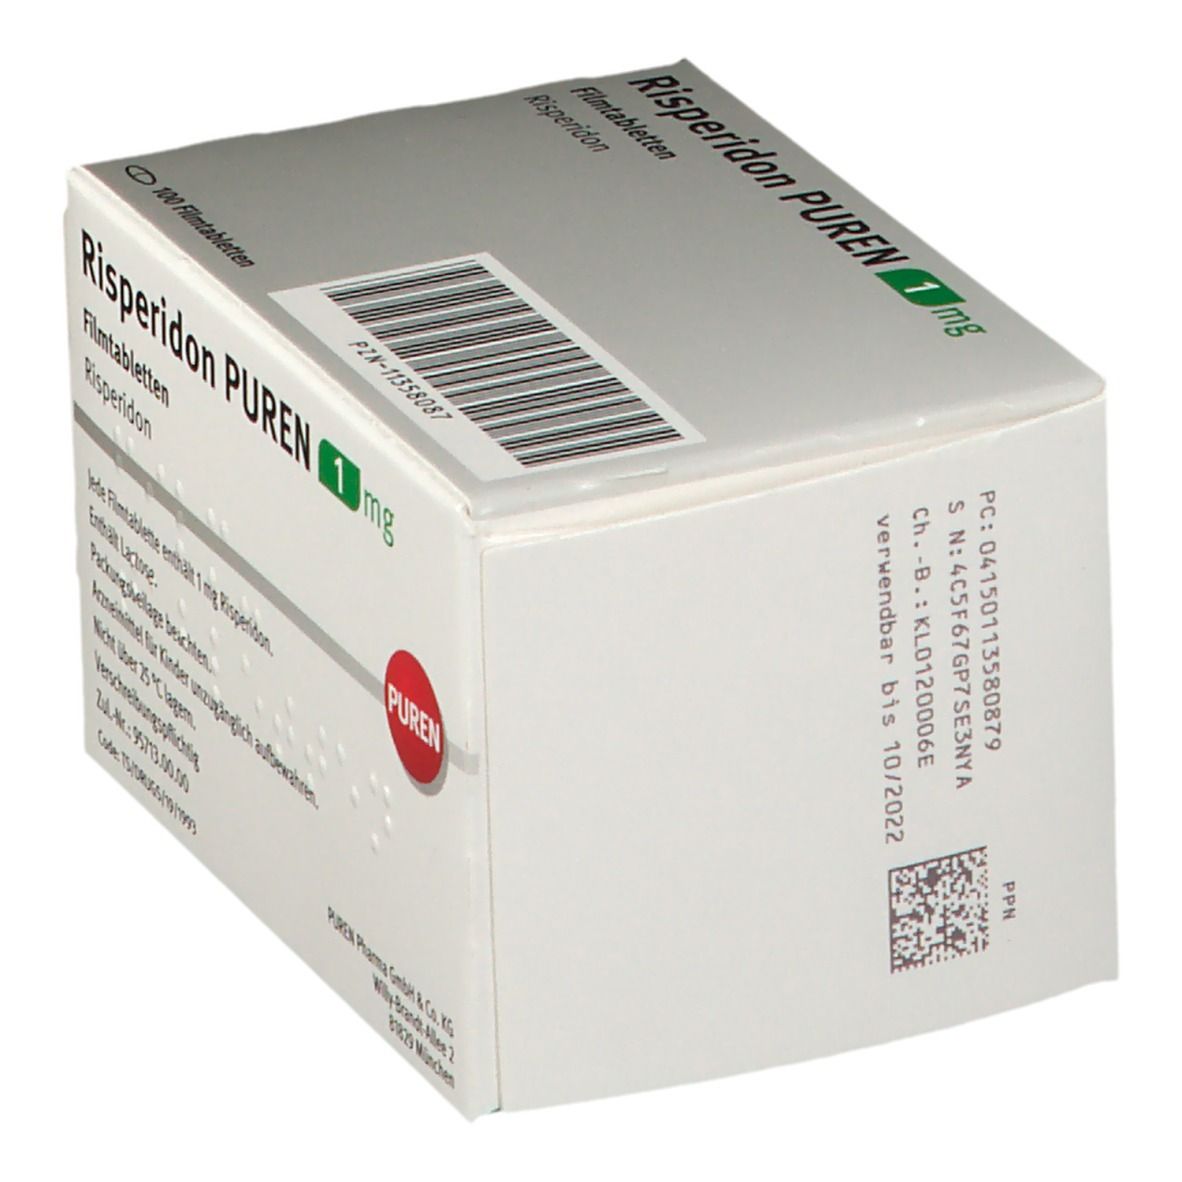 Risperidon PUREN 1 mg